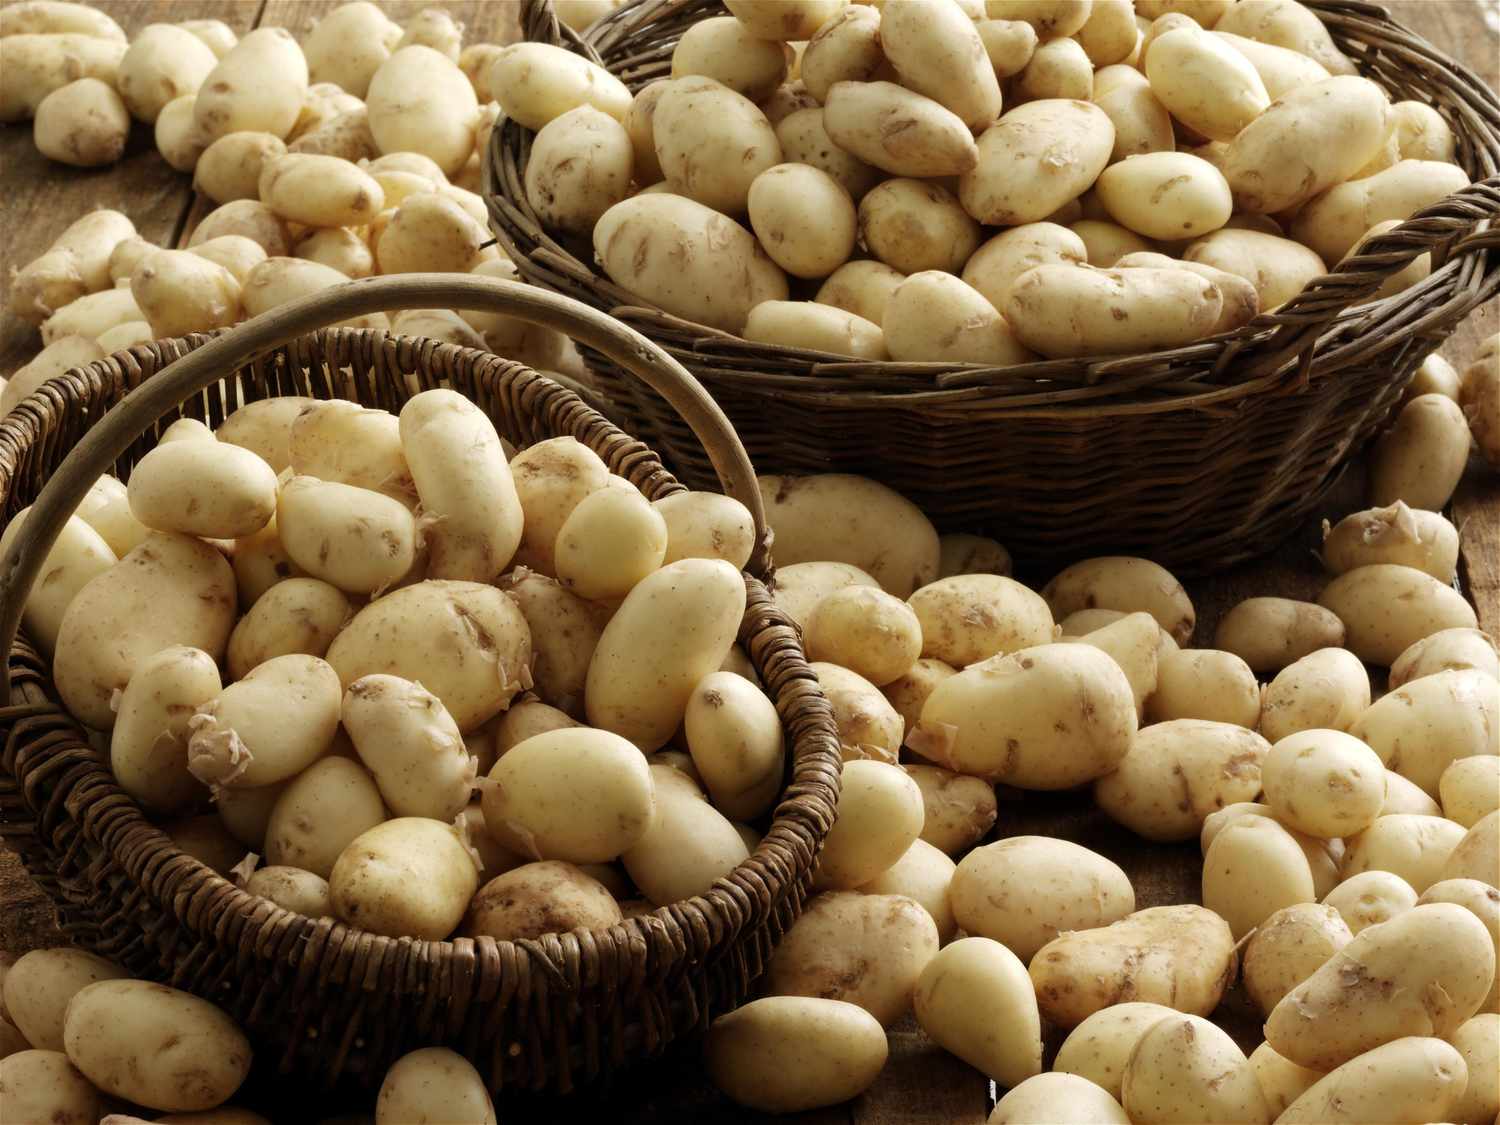 Baskets full of white potatoes